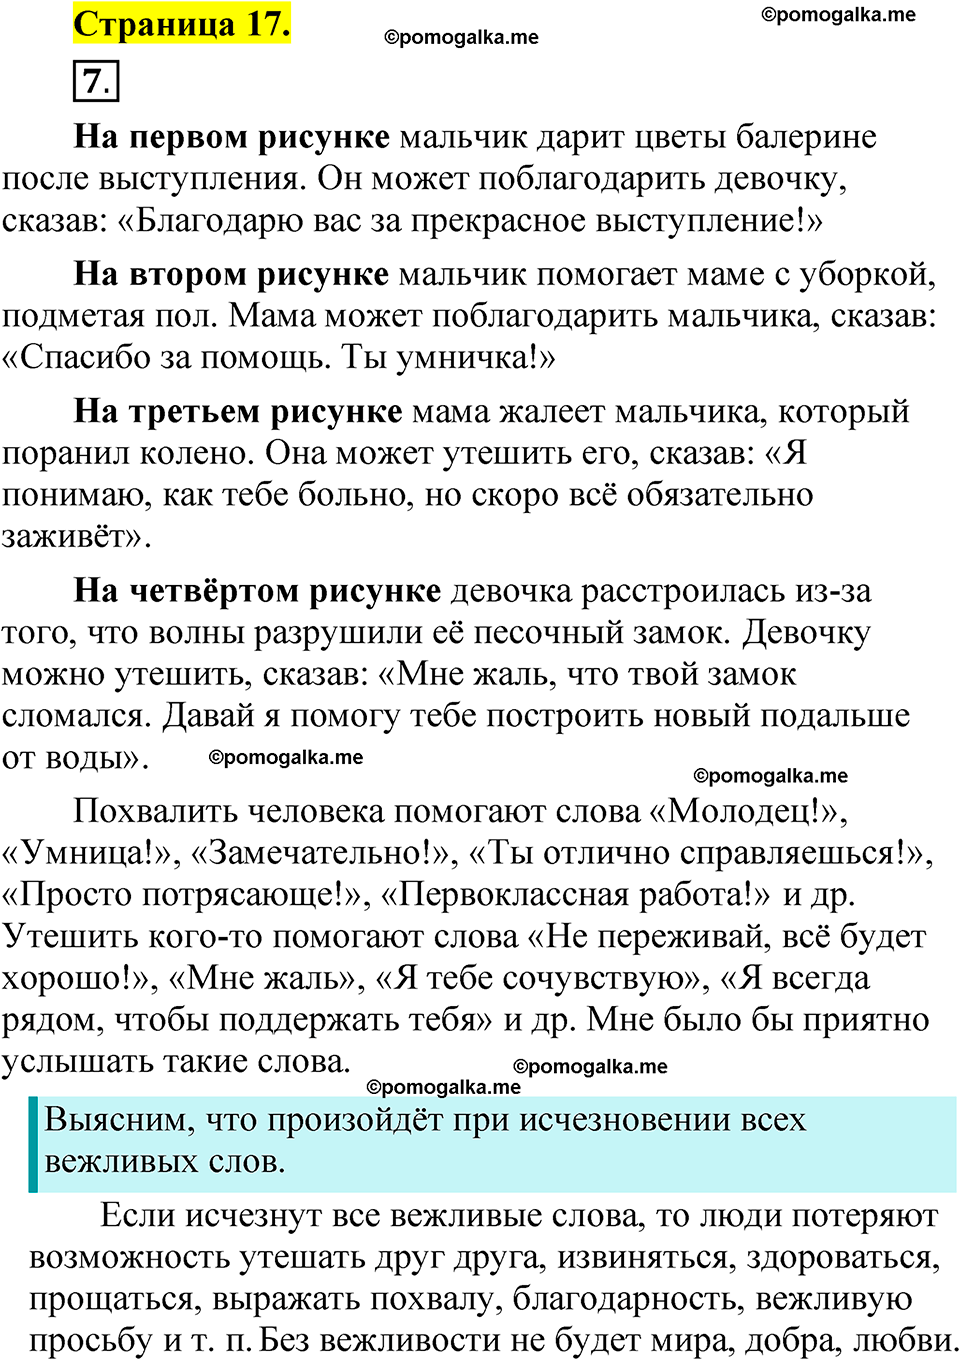 страница 17 русский язык 1 класс Александрова 2023